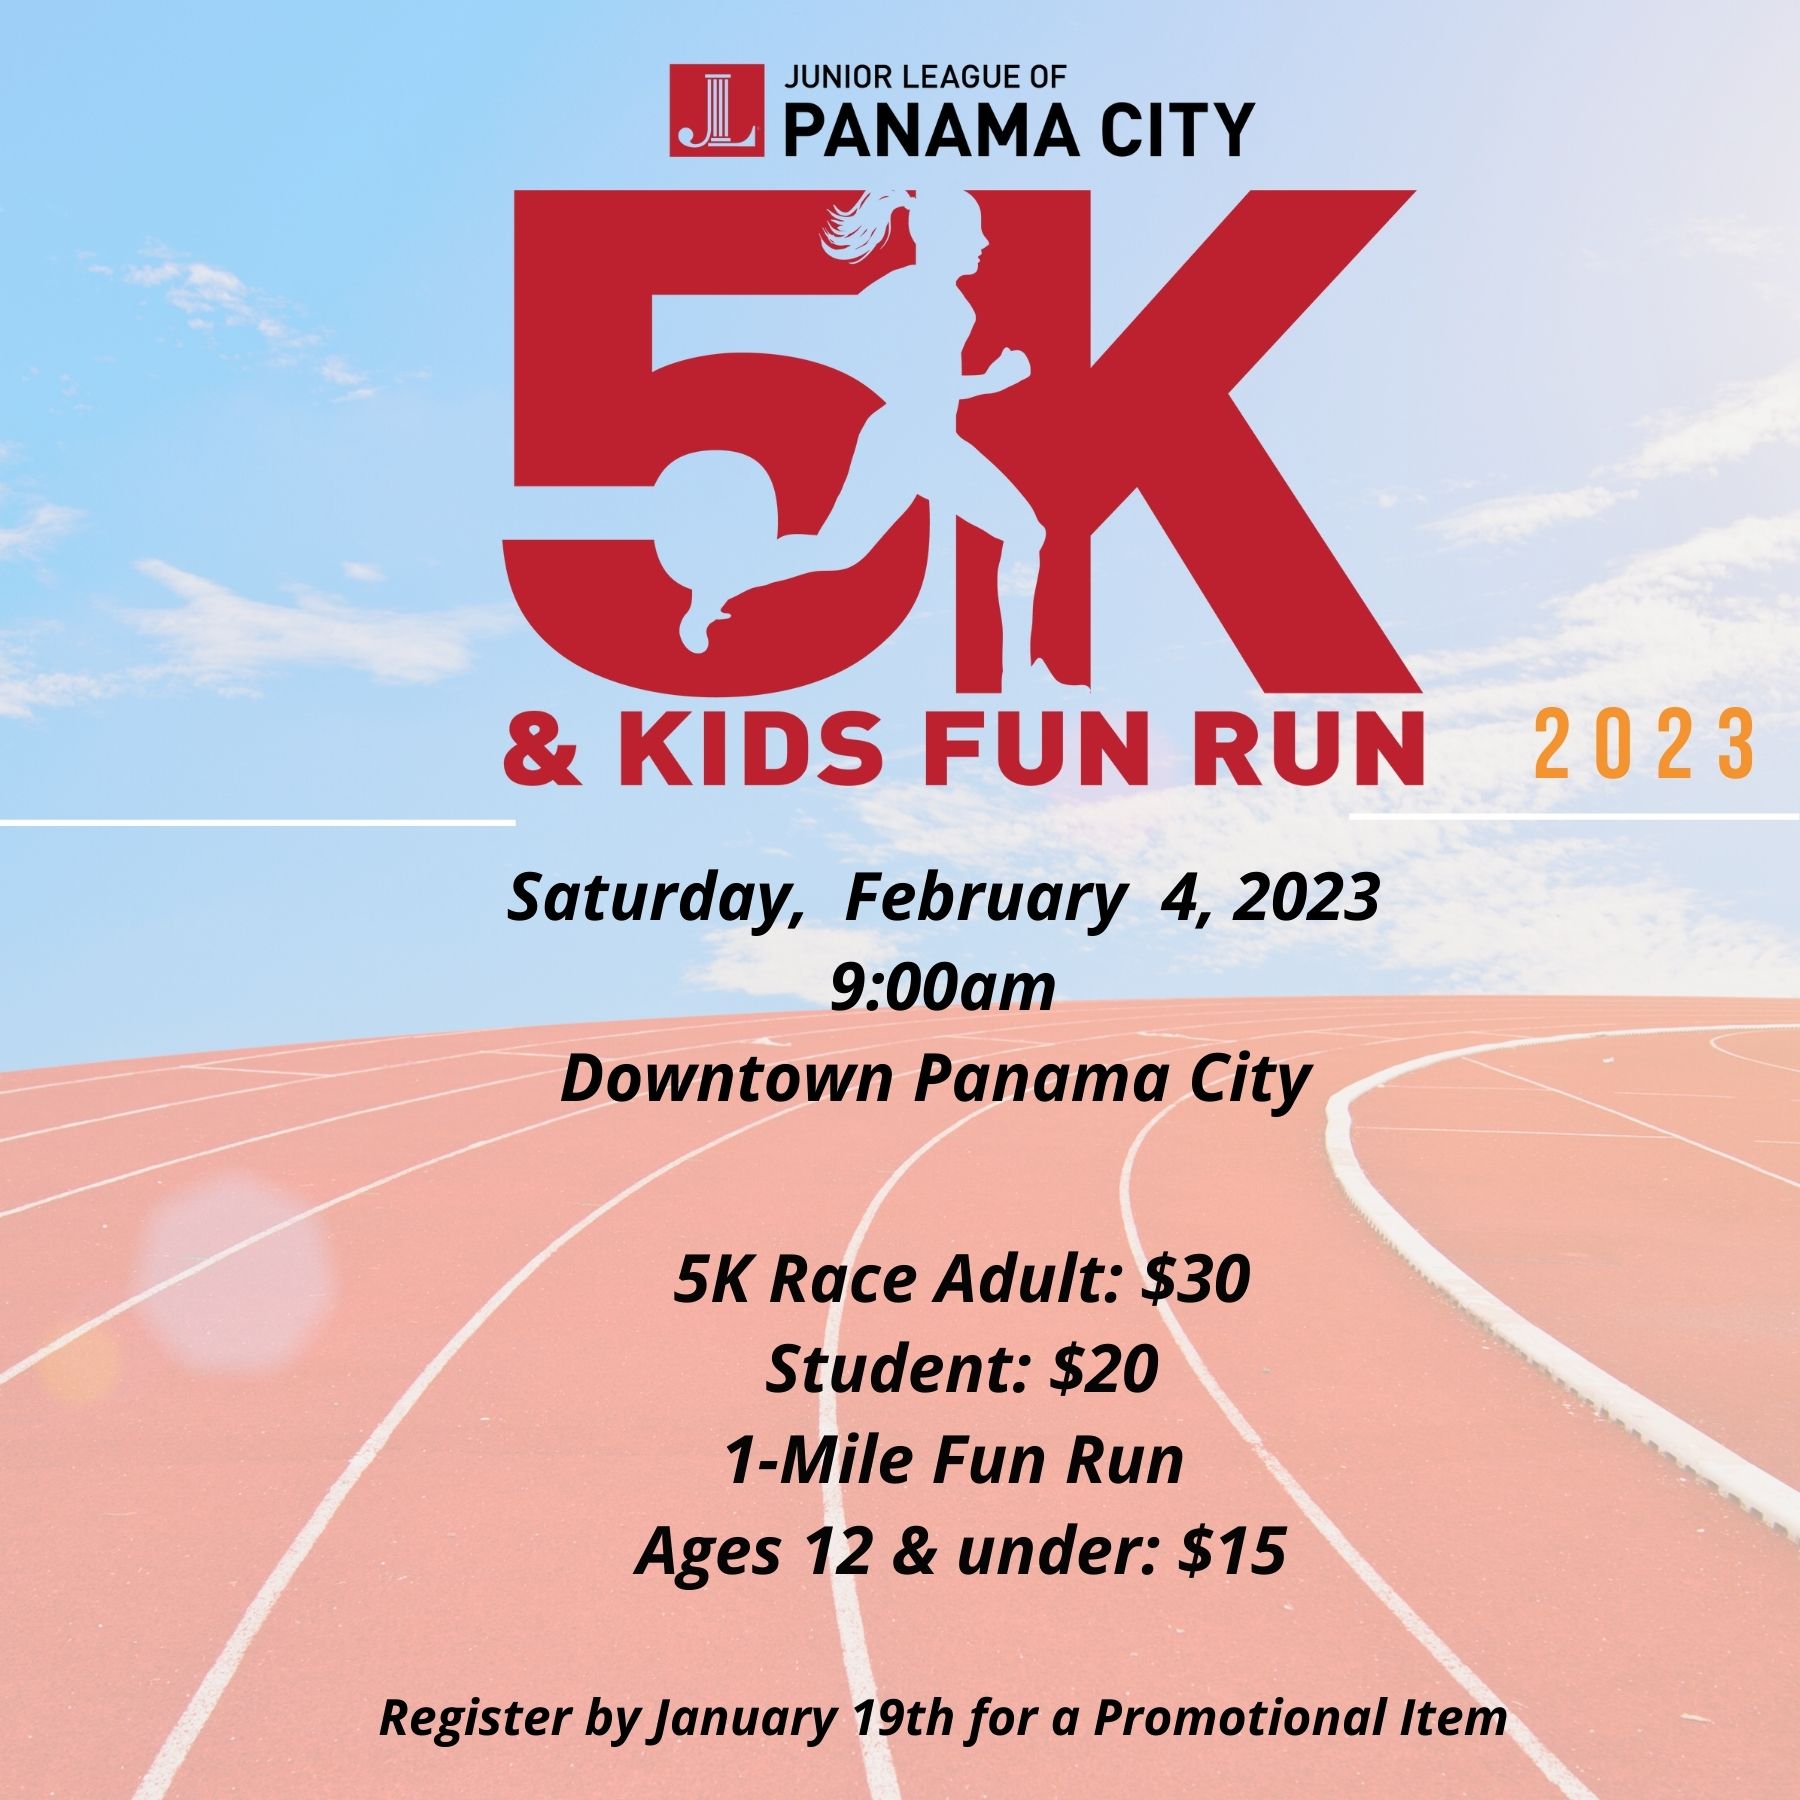 5K Race 2023 Junior League of Panama City